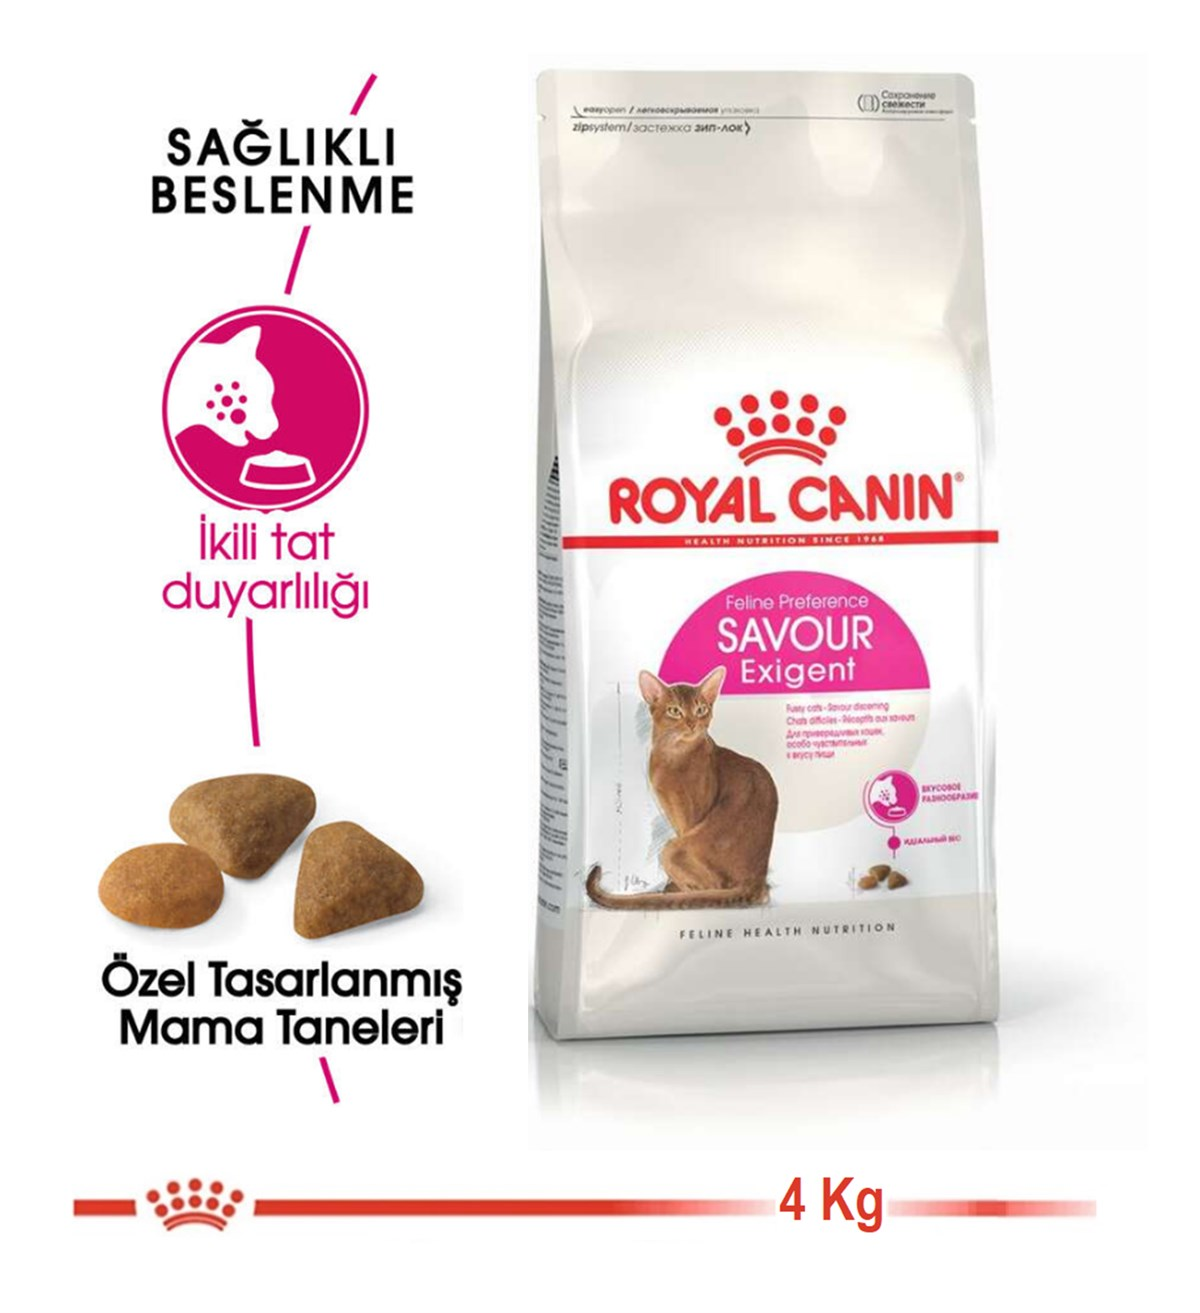 Royal Canin Exigent Savour Sensation Yetişkin Kedi Maması 4 kg